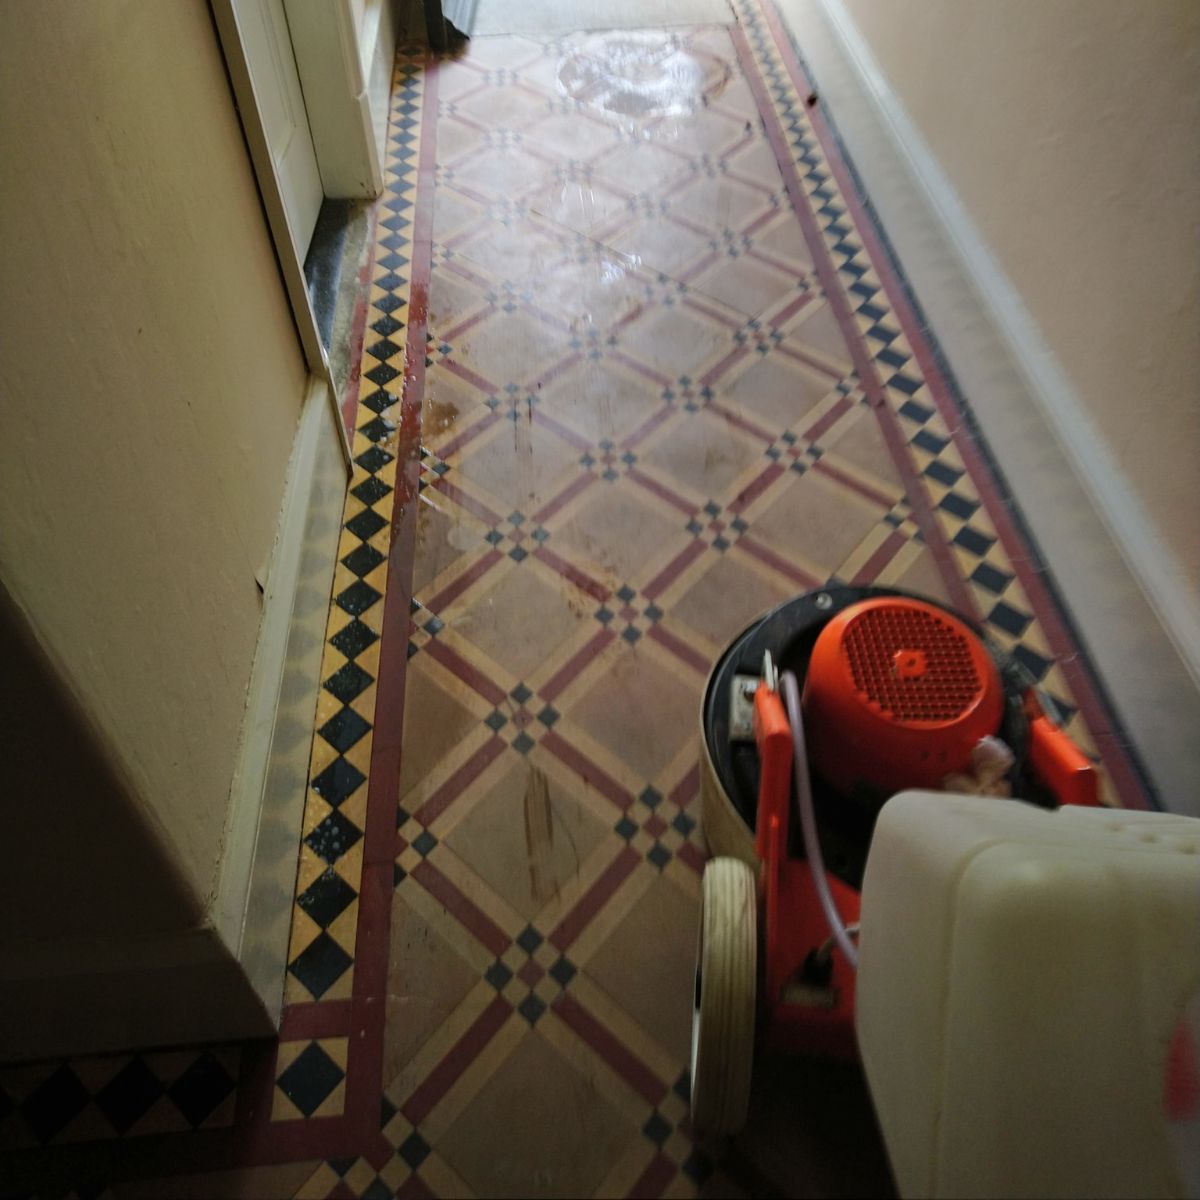 Tile floor restoration Scunthorpe